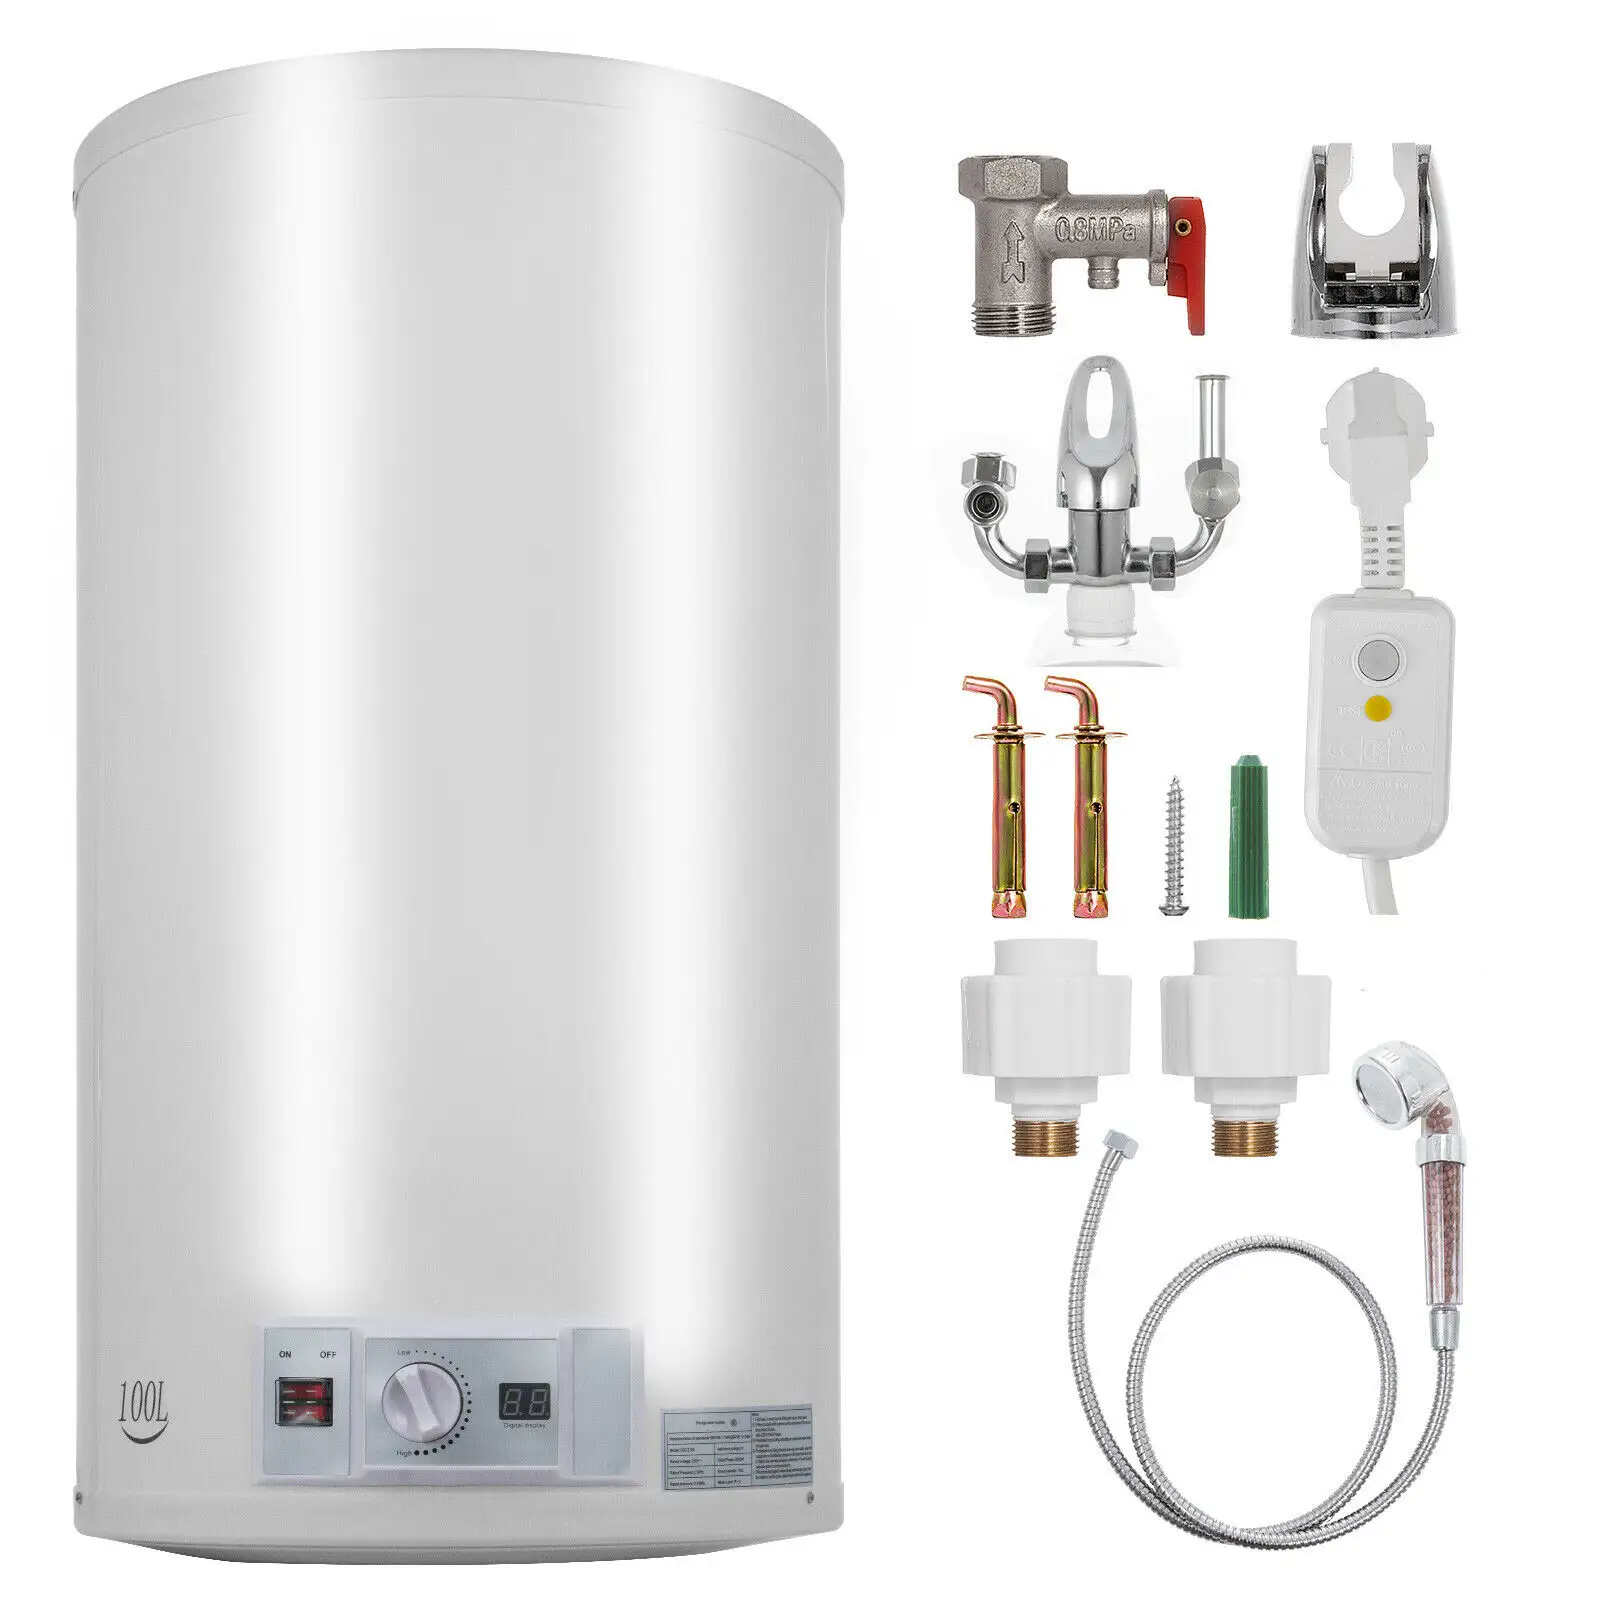 Calentador de agua caliente eléctrico de 100L, calentador de tanque de almacenamiento de Caldera, seguro con cabezal de ducha para Baño